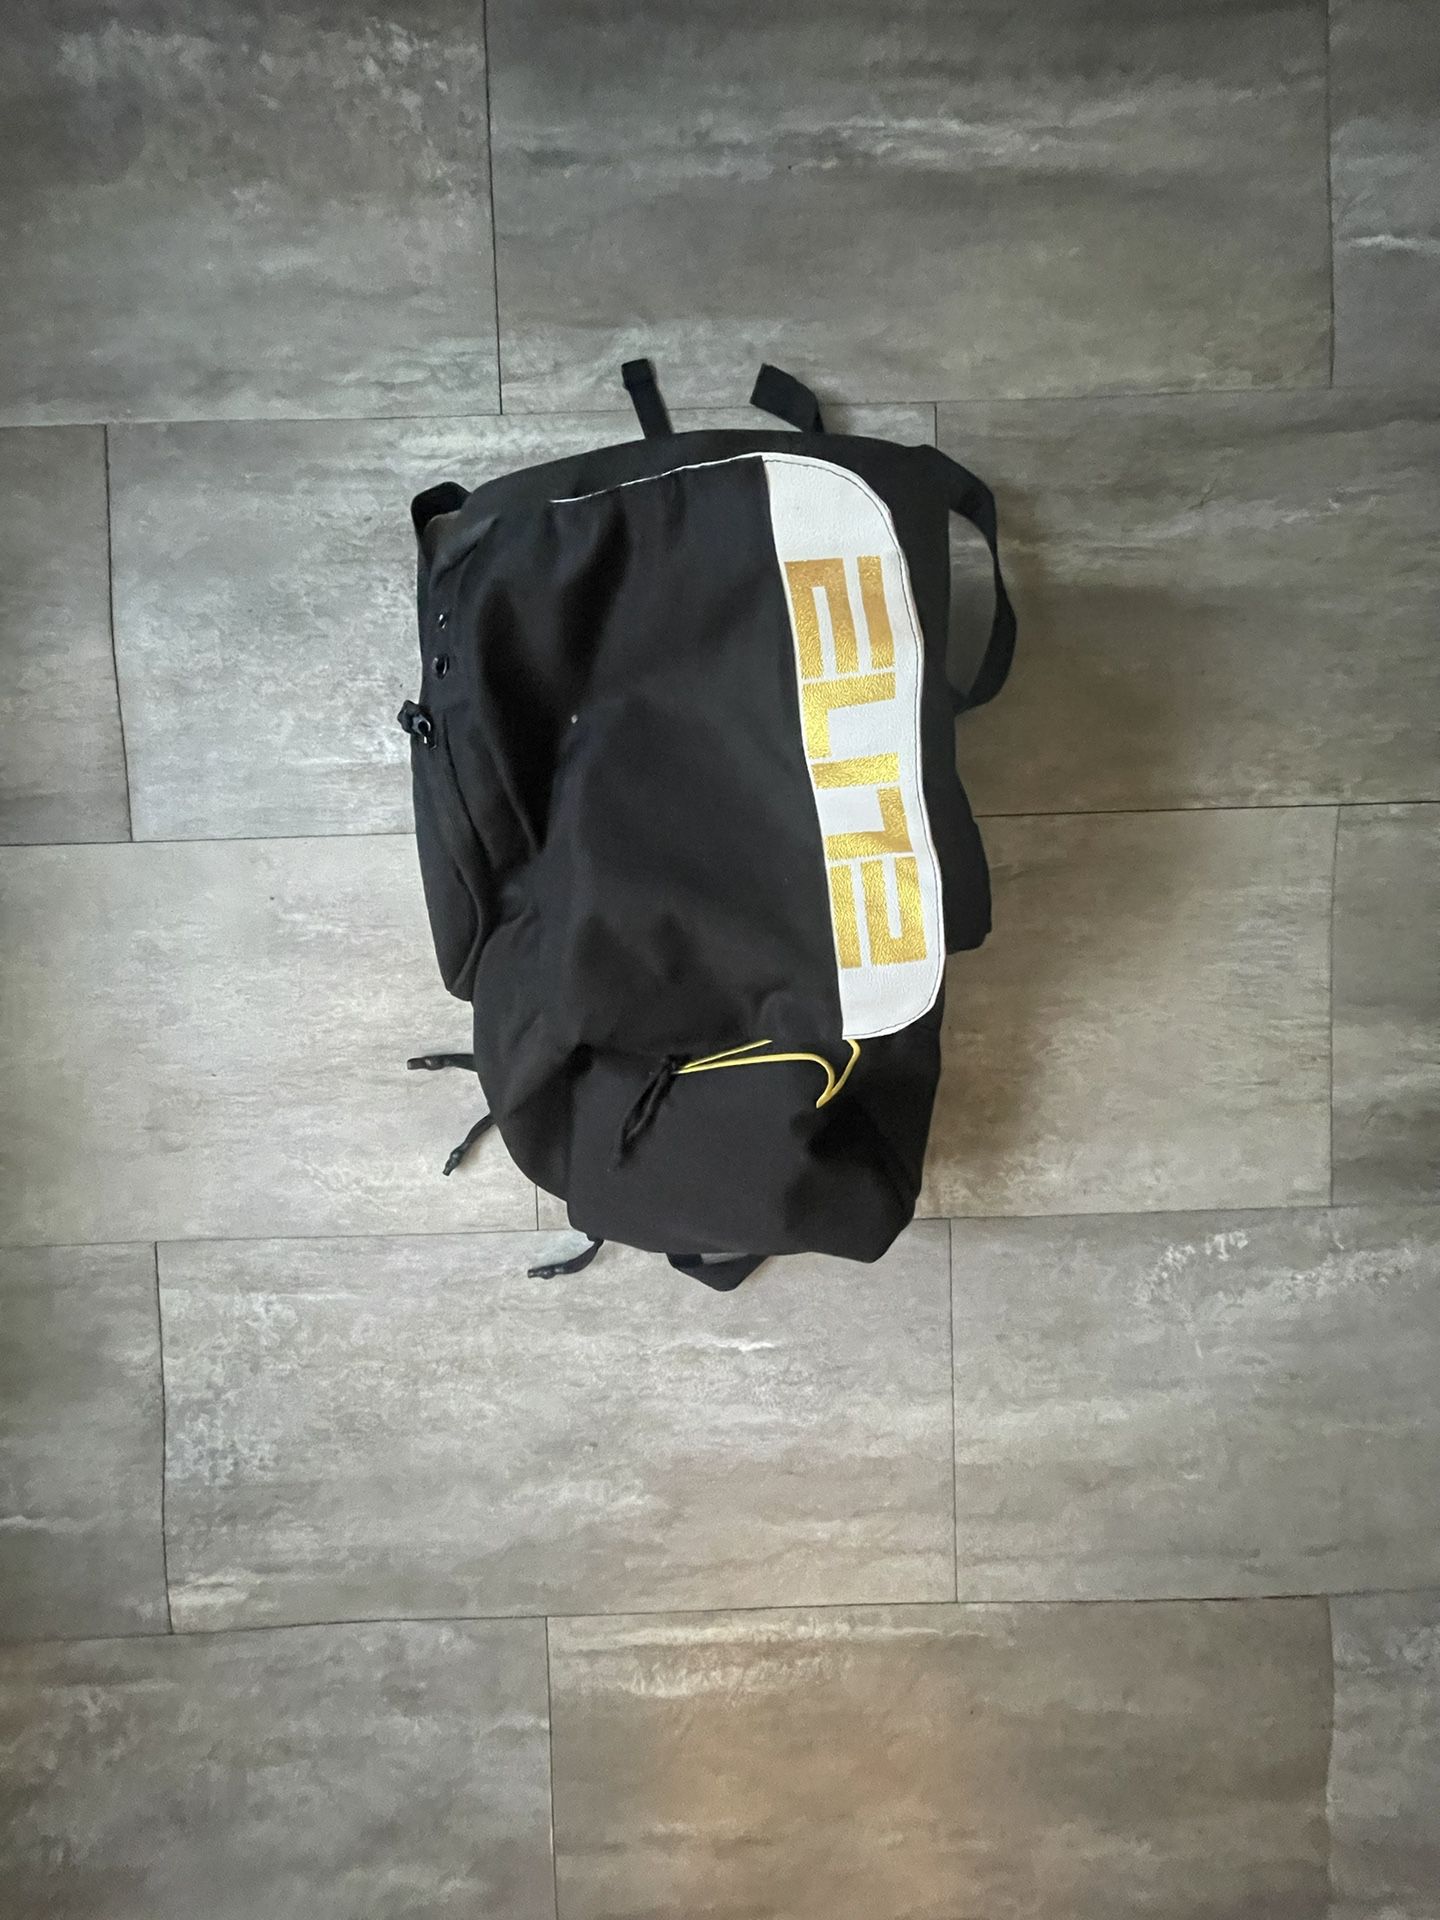 brand new nike elite bag